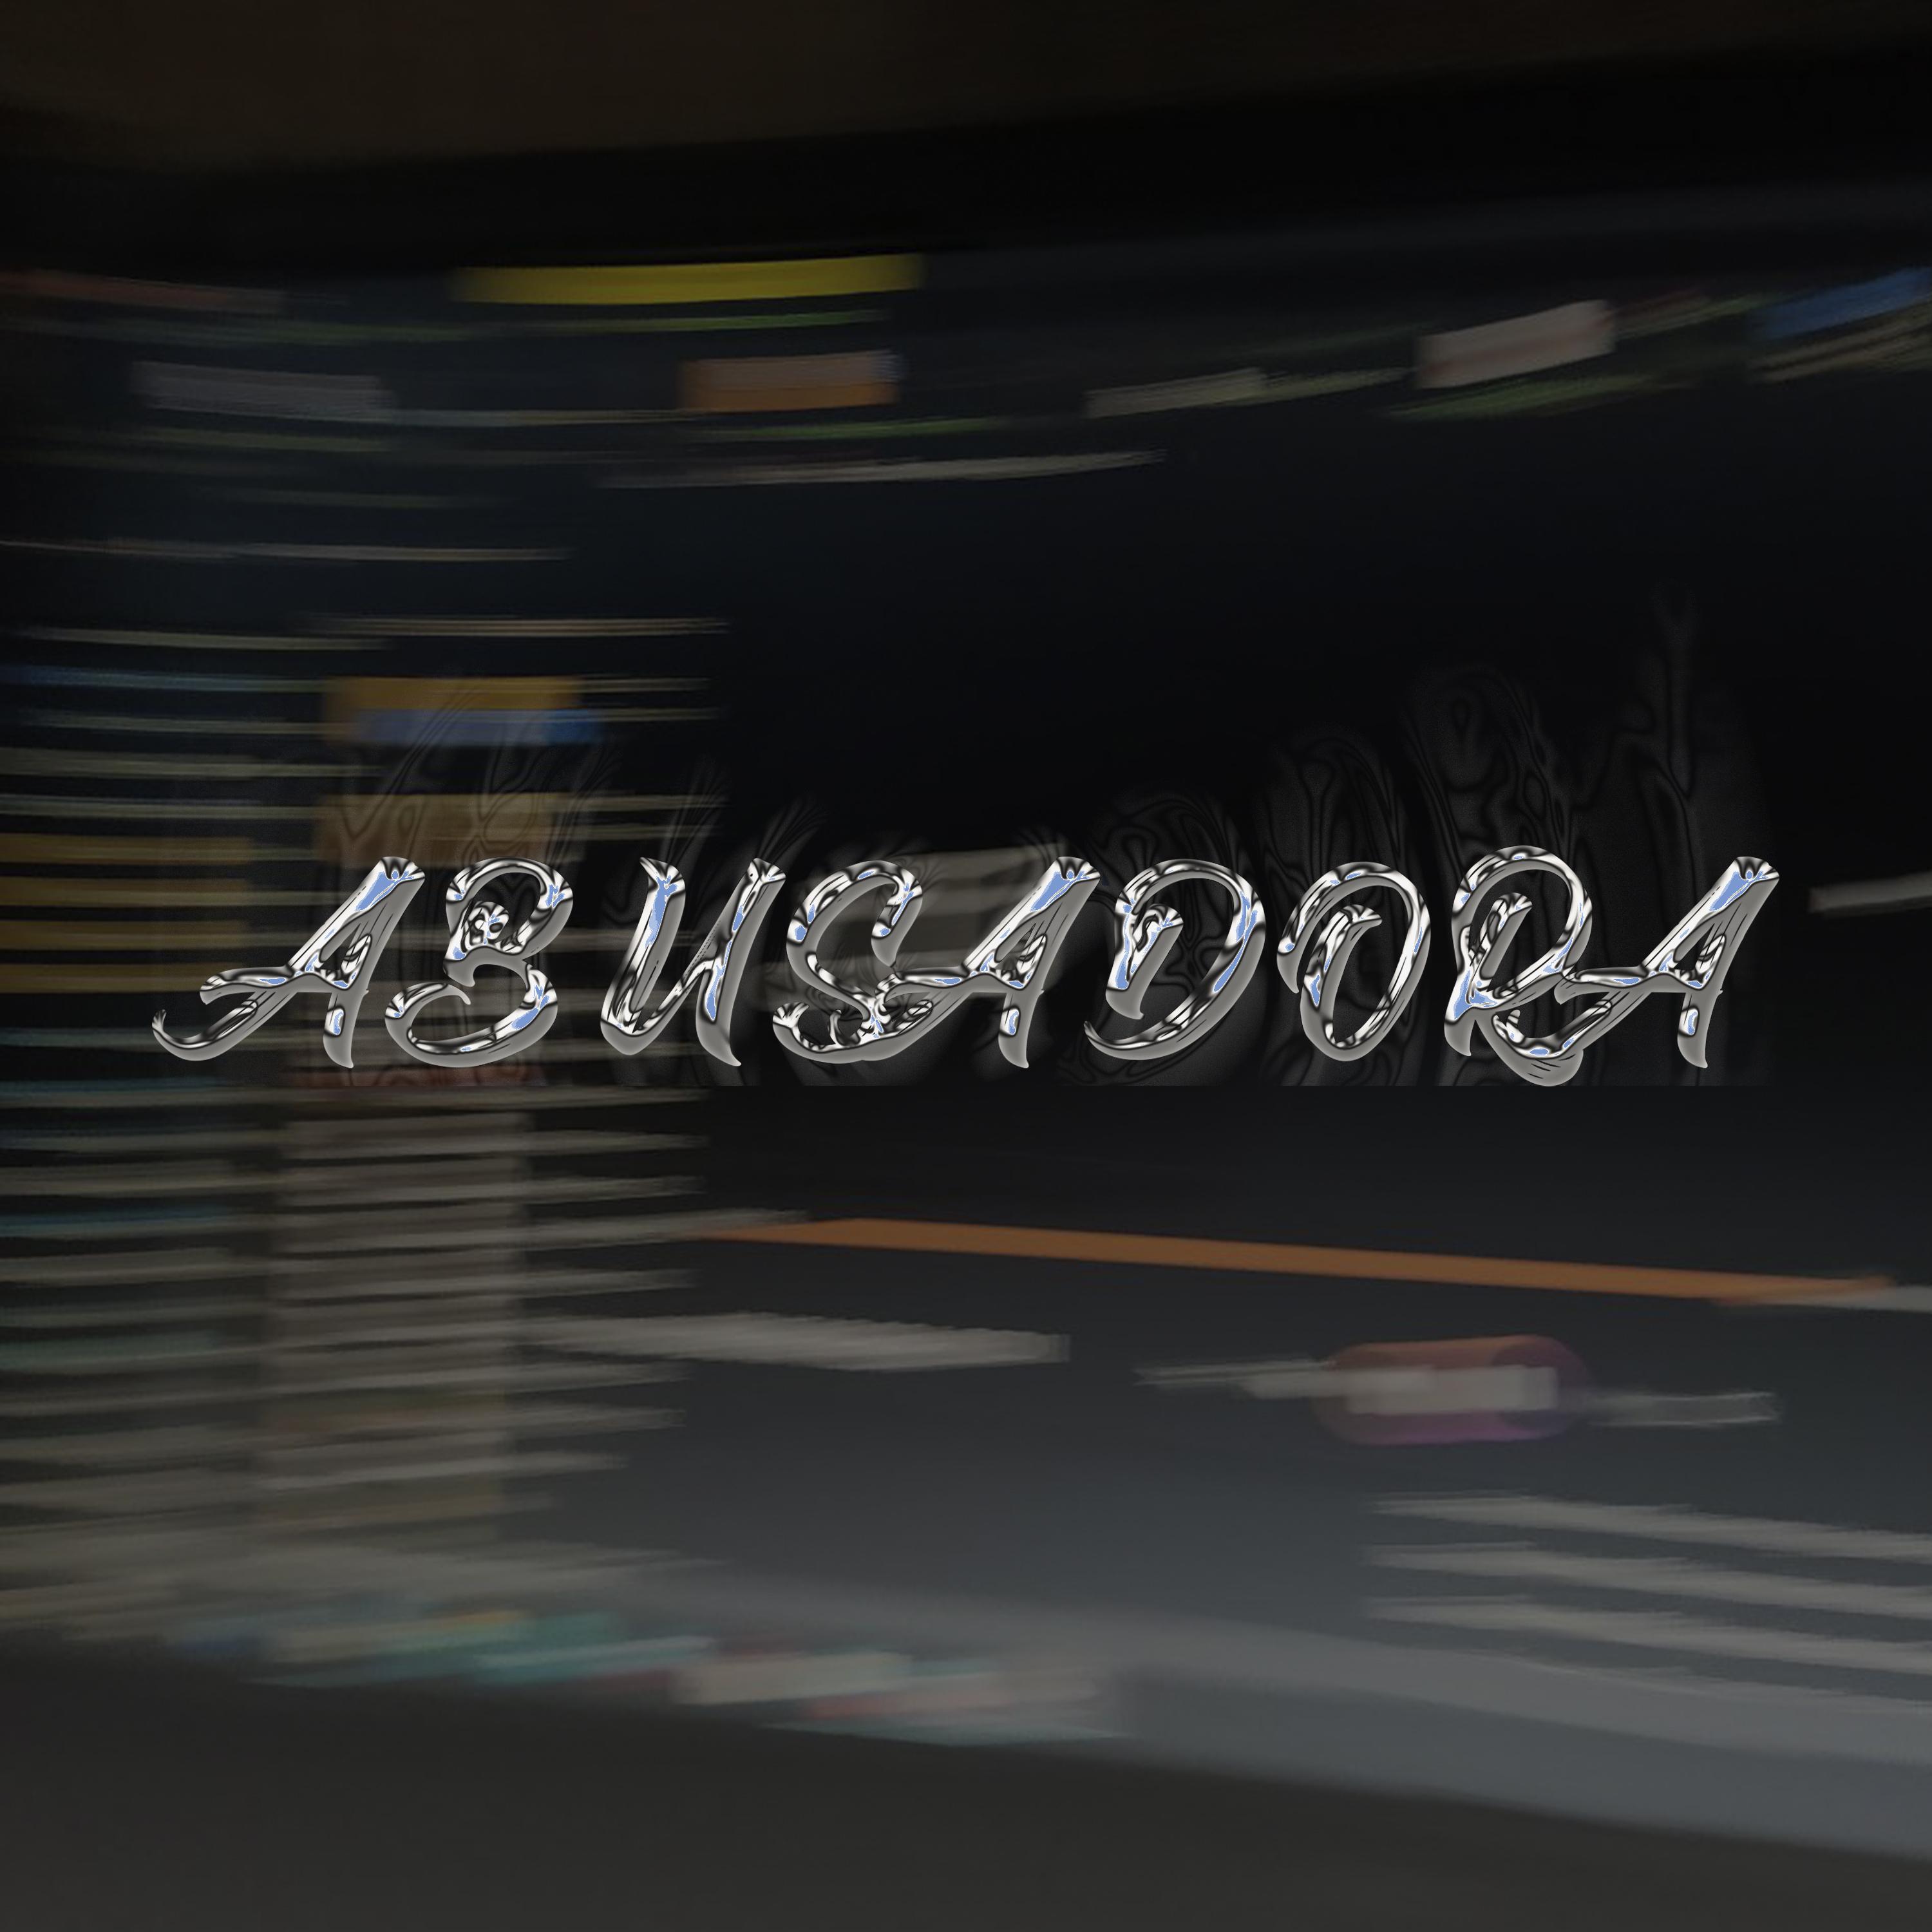 Постер альбома Abusadora